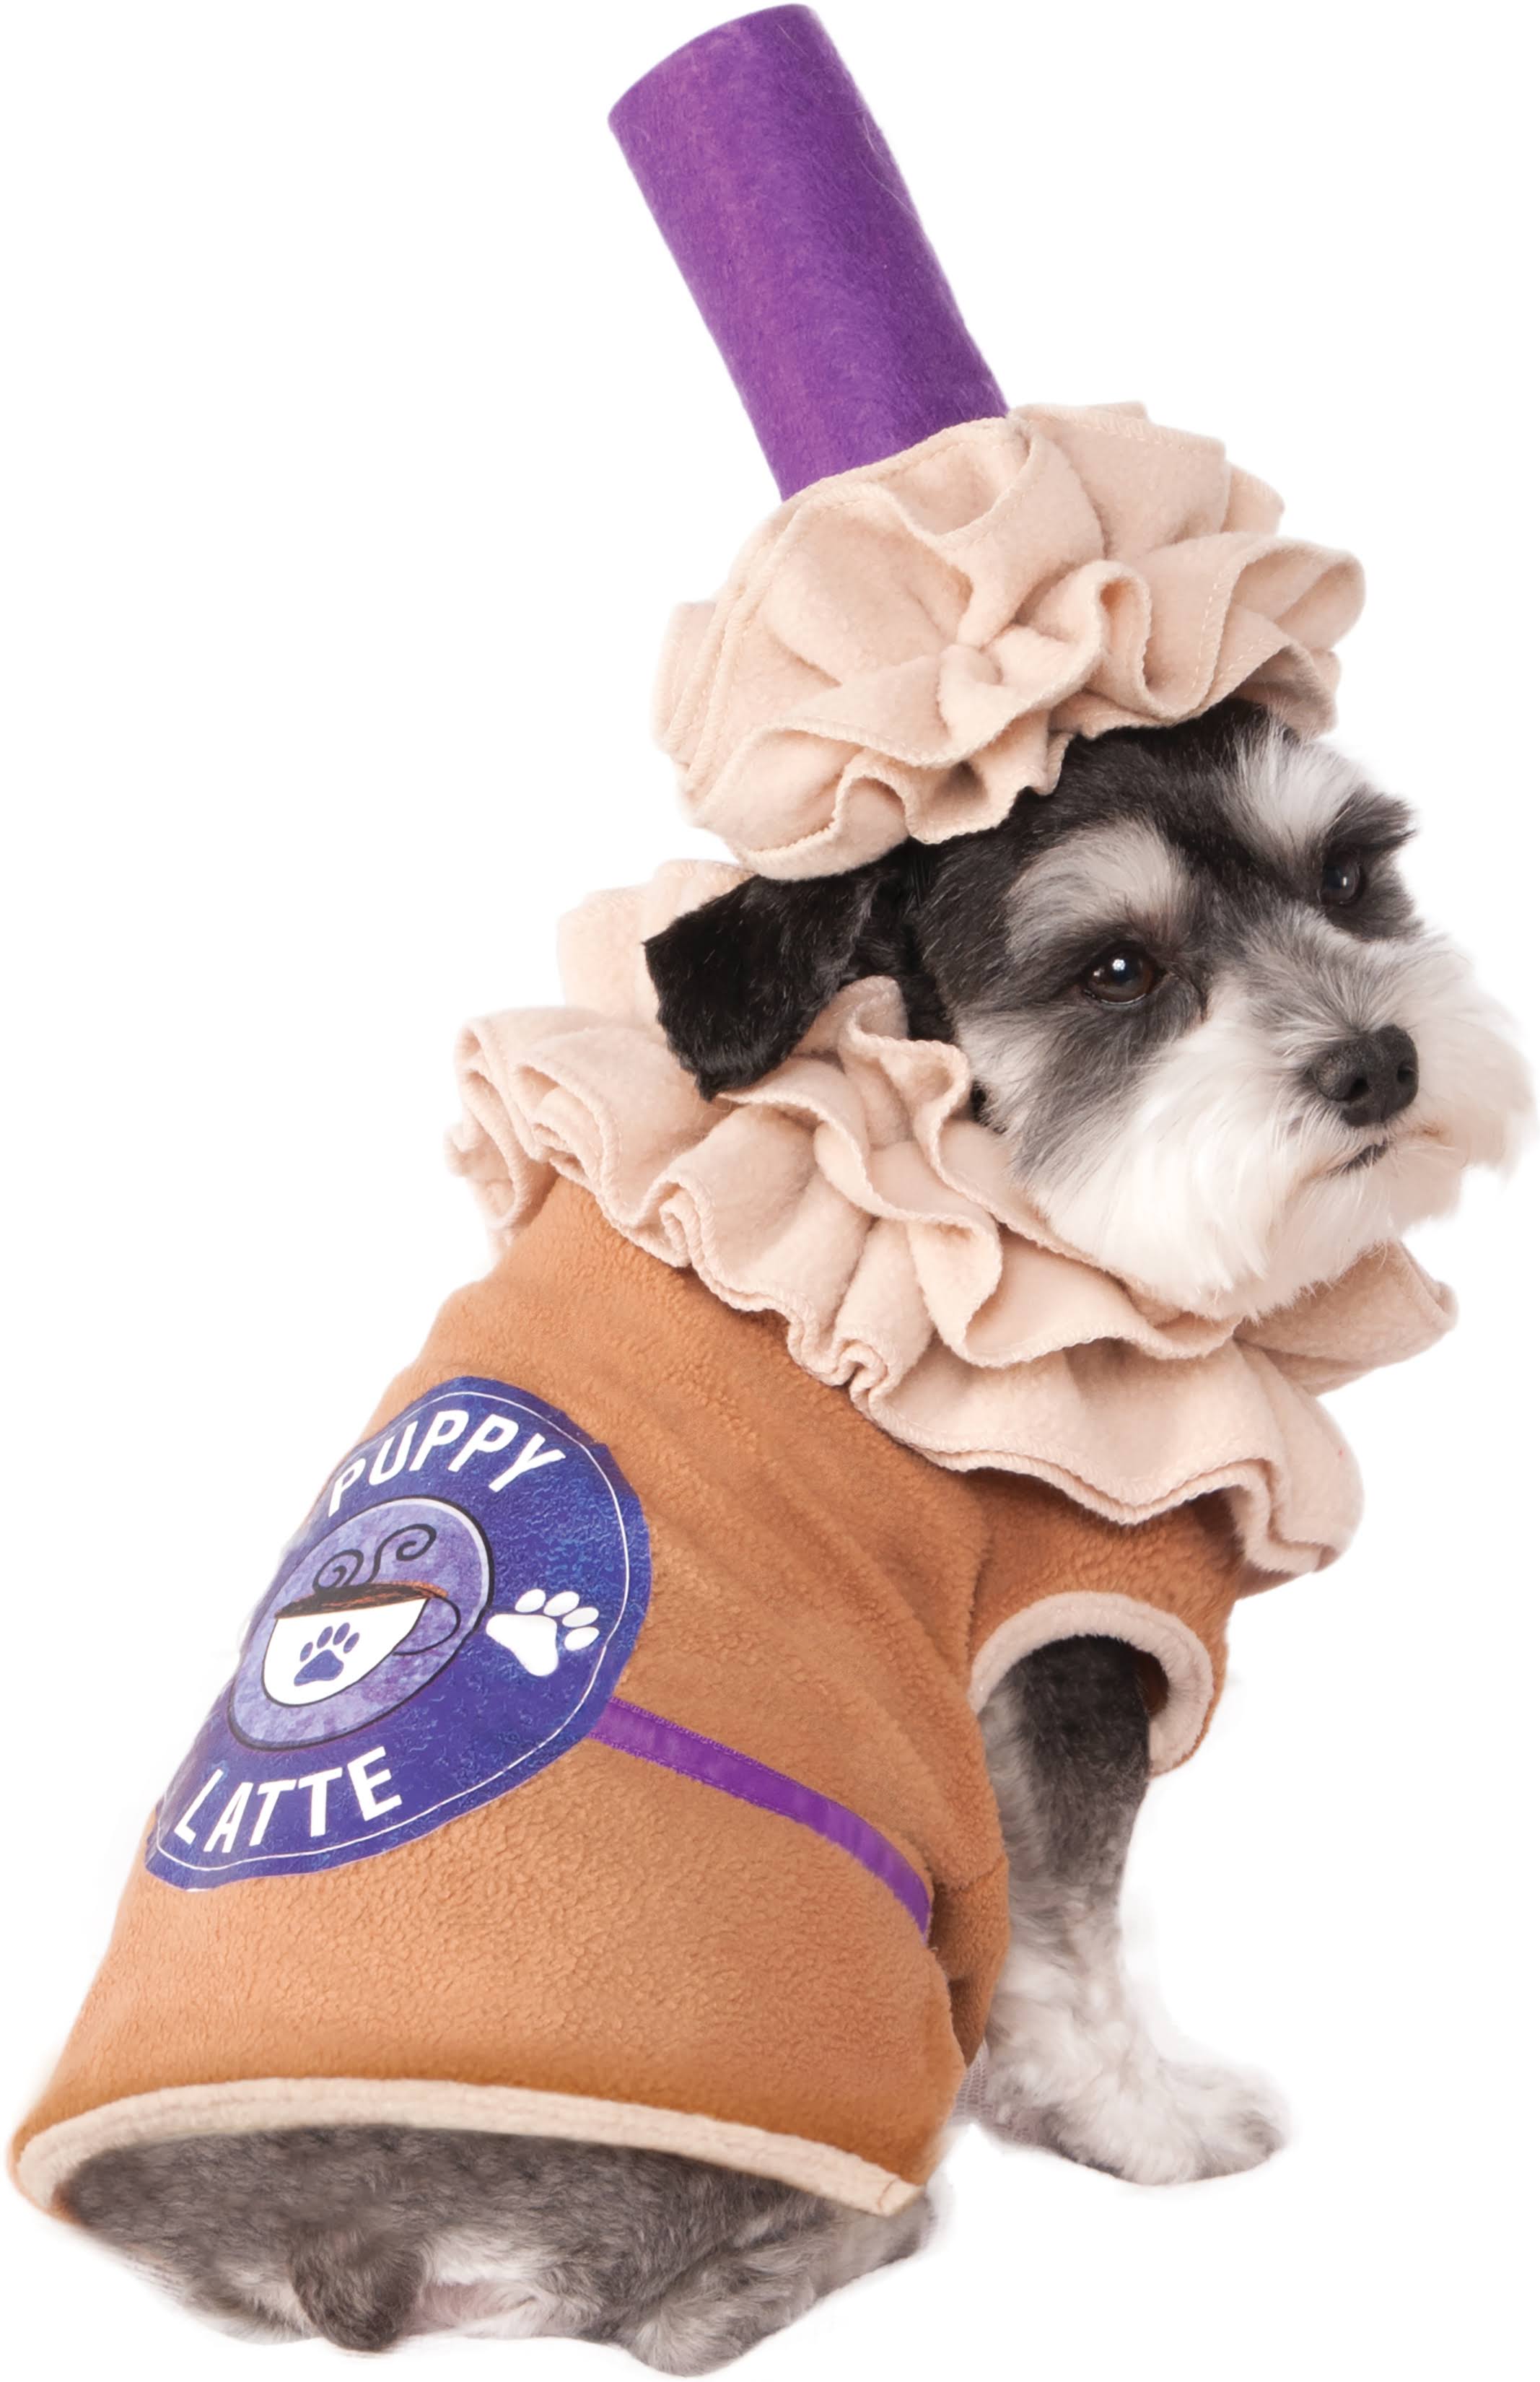 Pet Puppy Latte Costume - Large